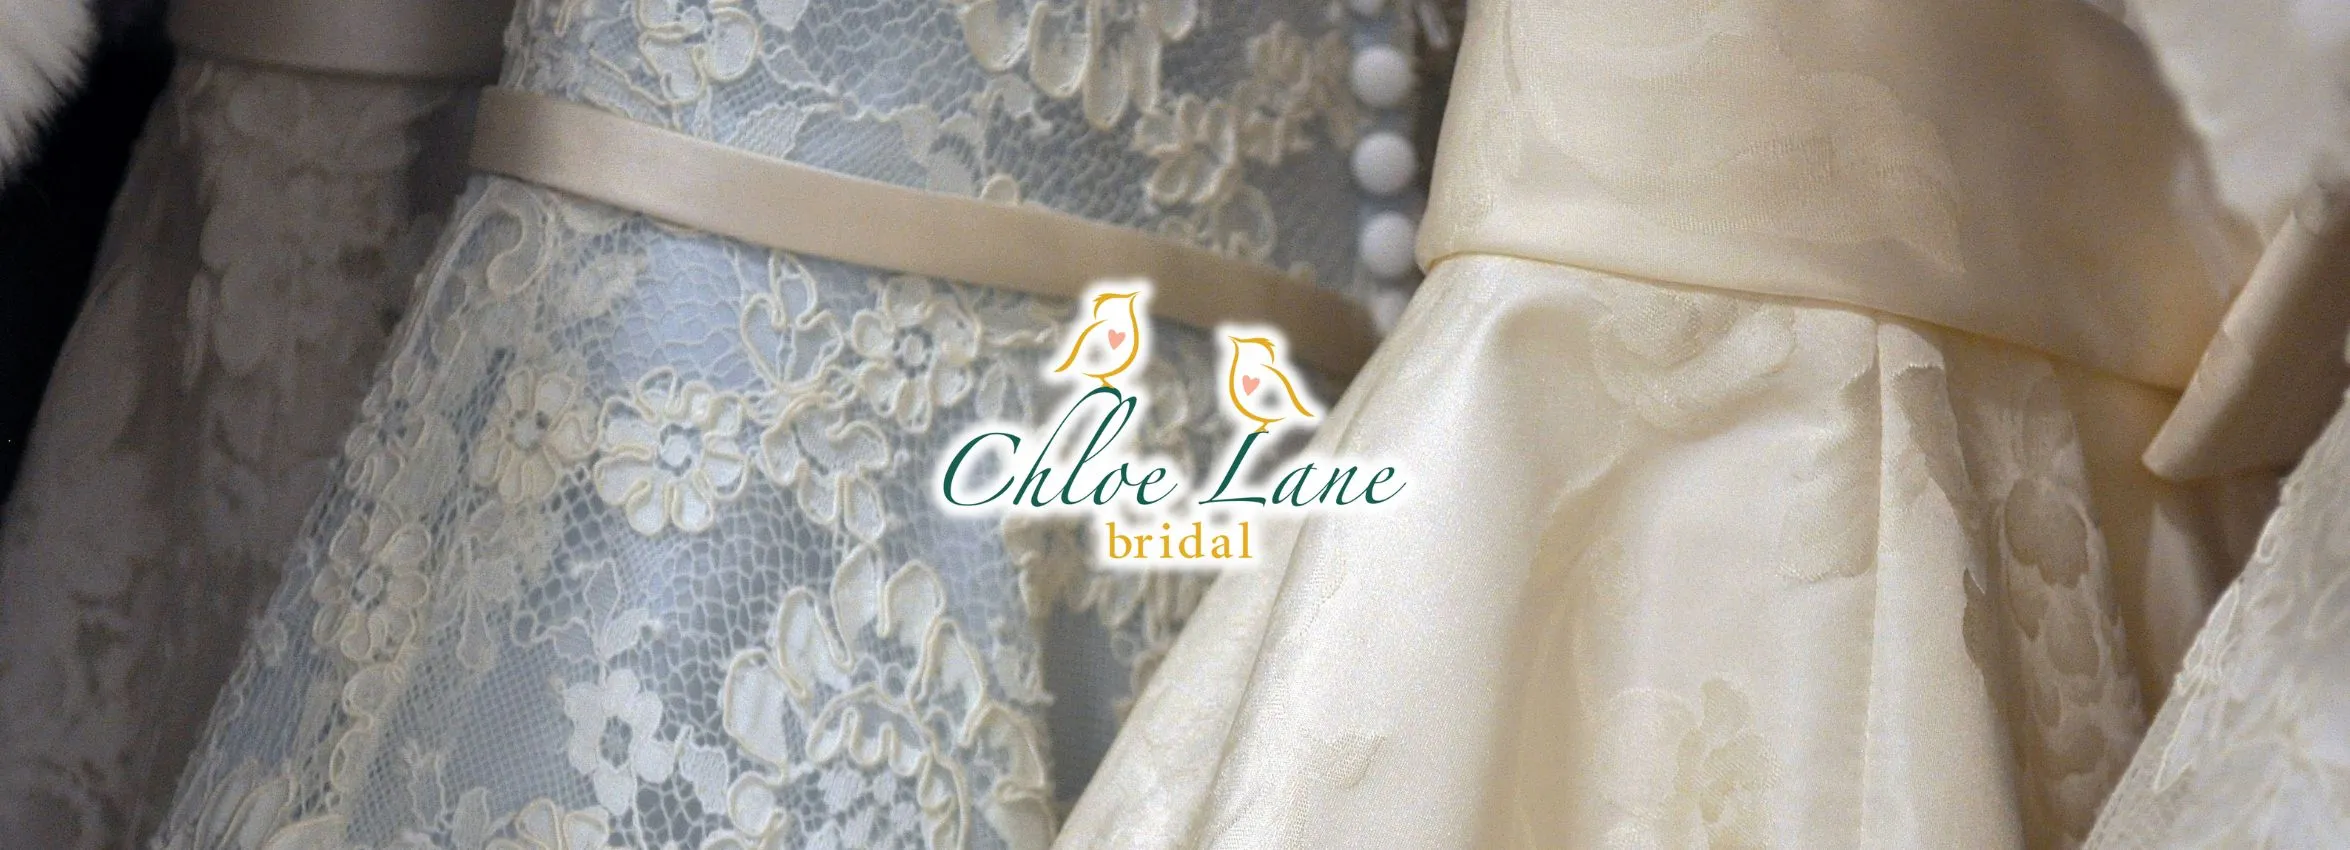 Chloe-Lane-Bridal_Desktop_ET-